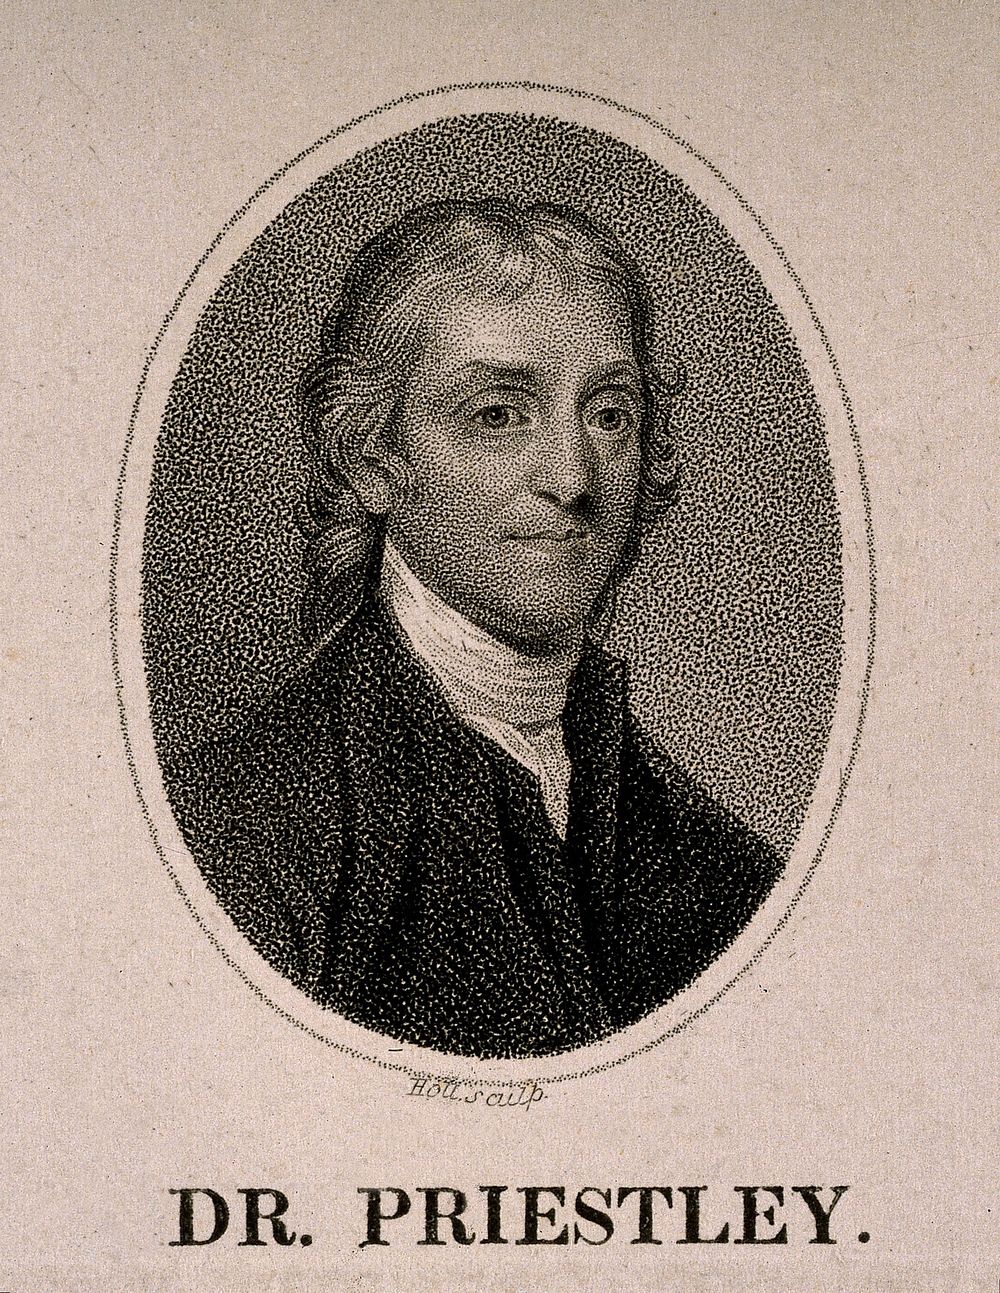 Joseph Priestley. Stipple engraving by Holl.